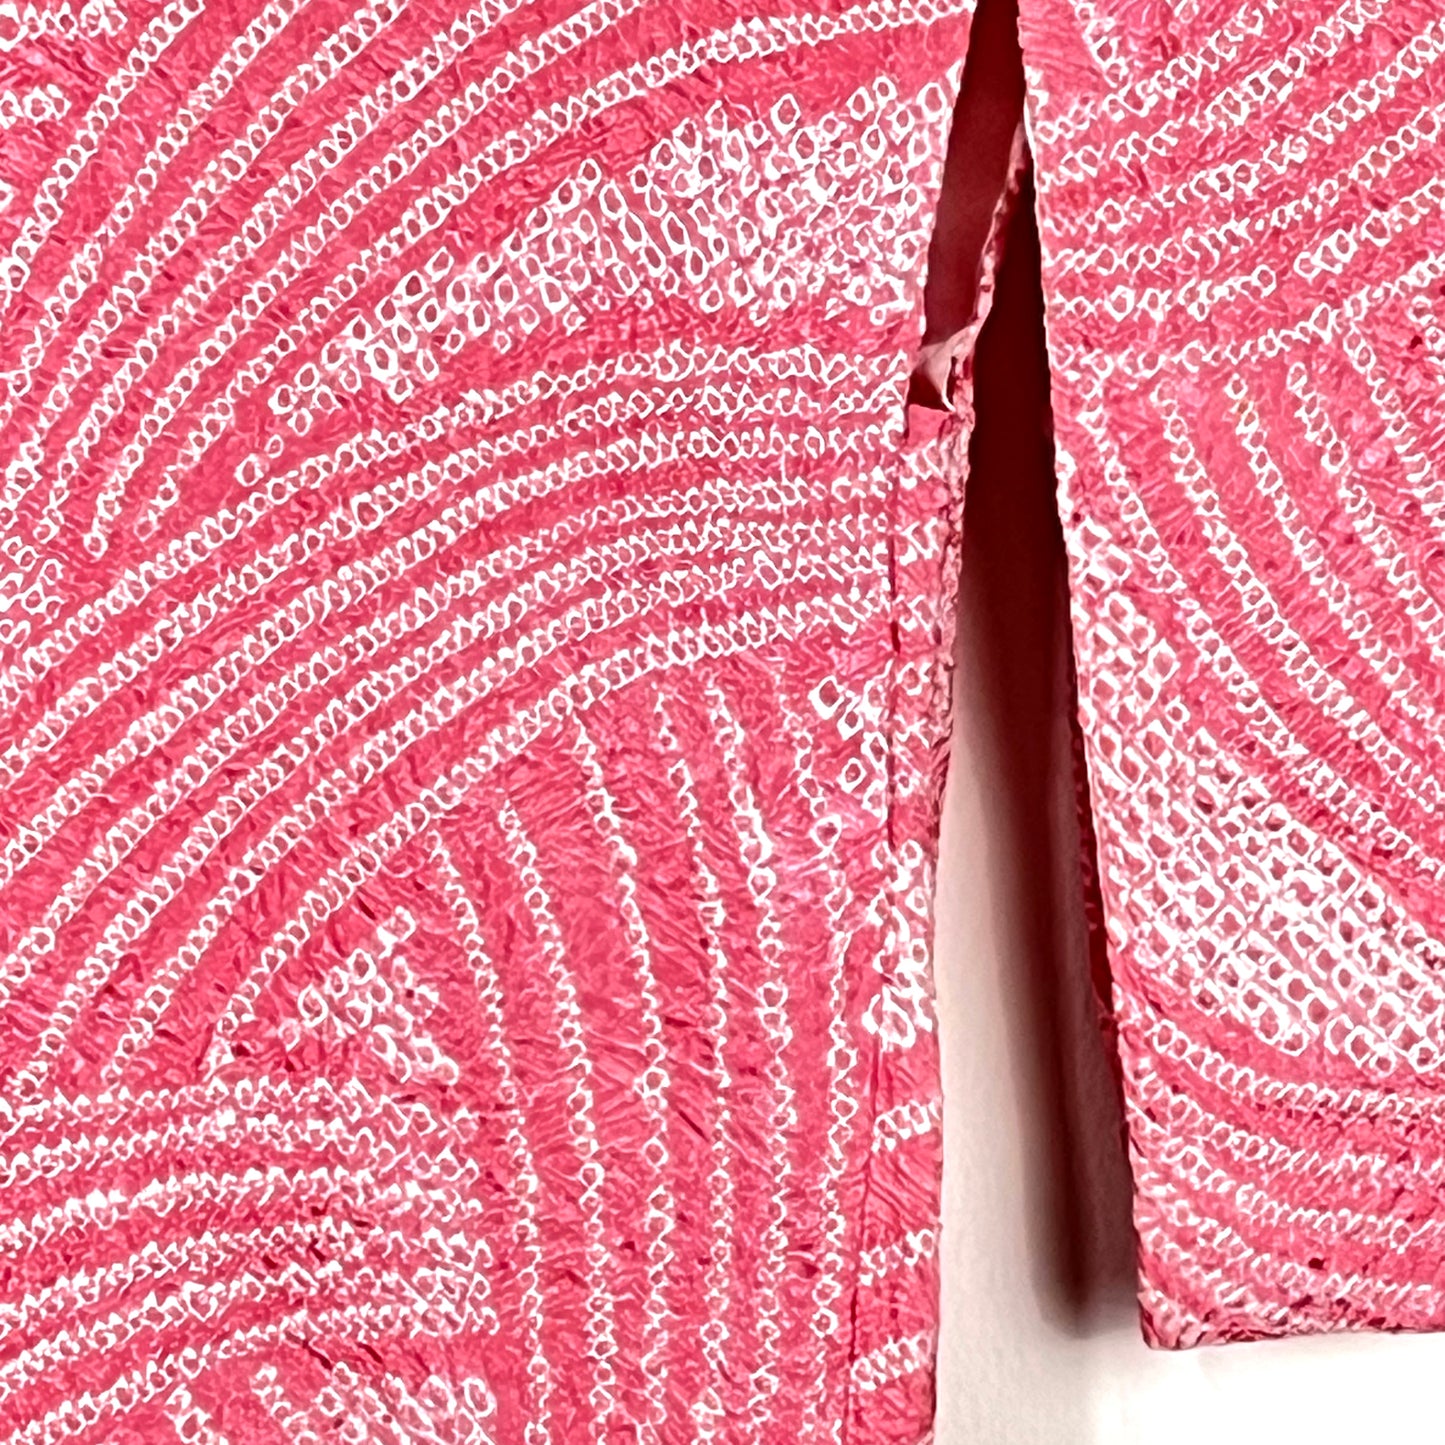 Vintage Japanese Silk Haori Coat in Shibori Tie-dye Pink Weave pattern 28"L